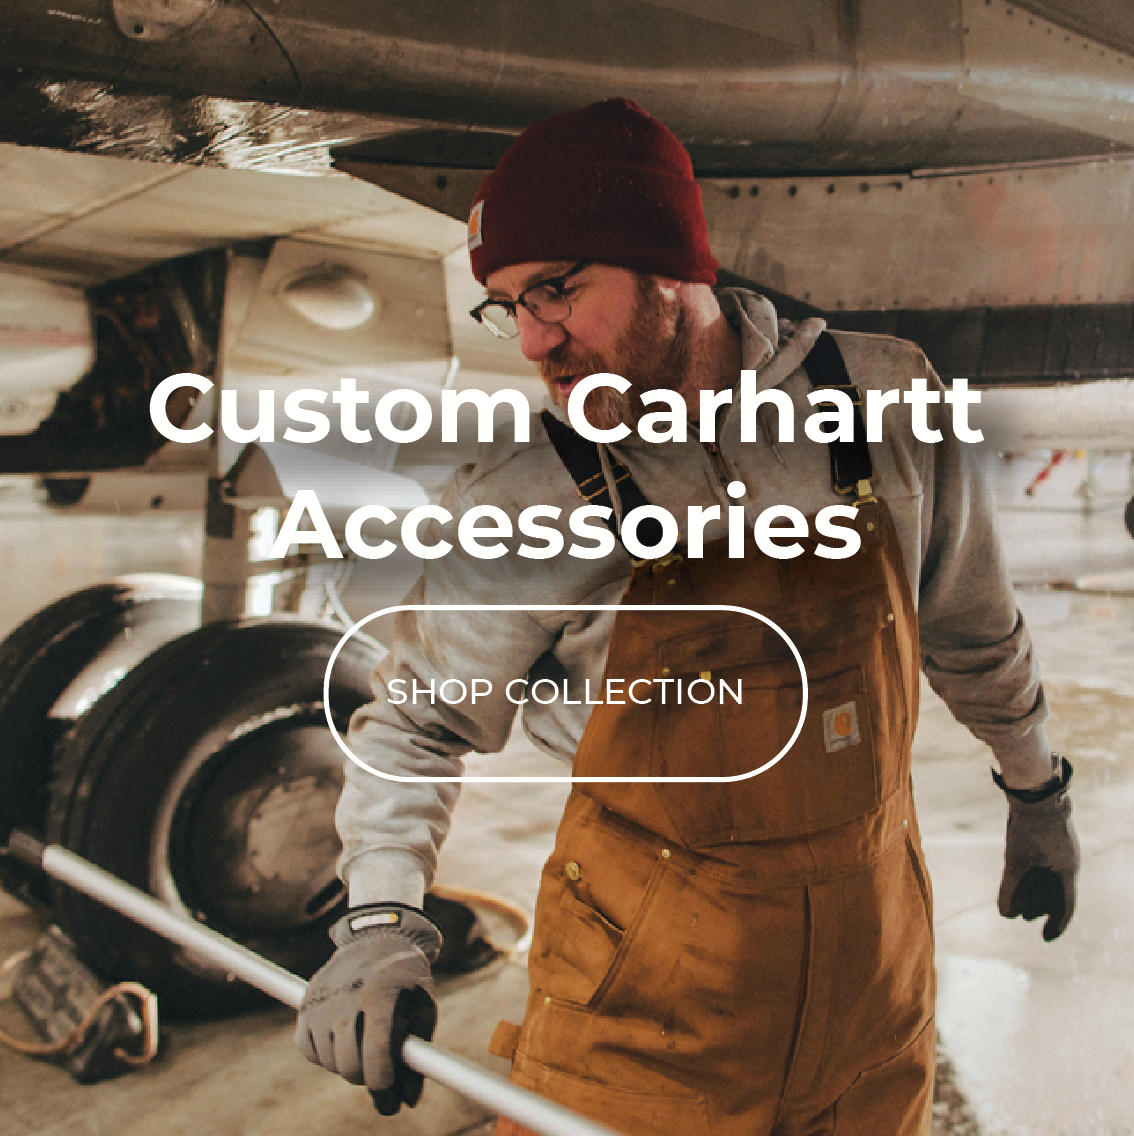 Carhartt, Accessories